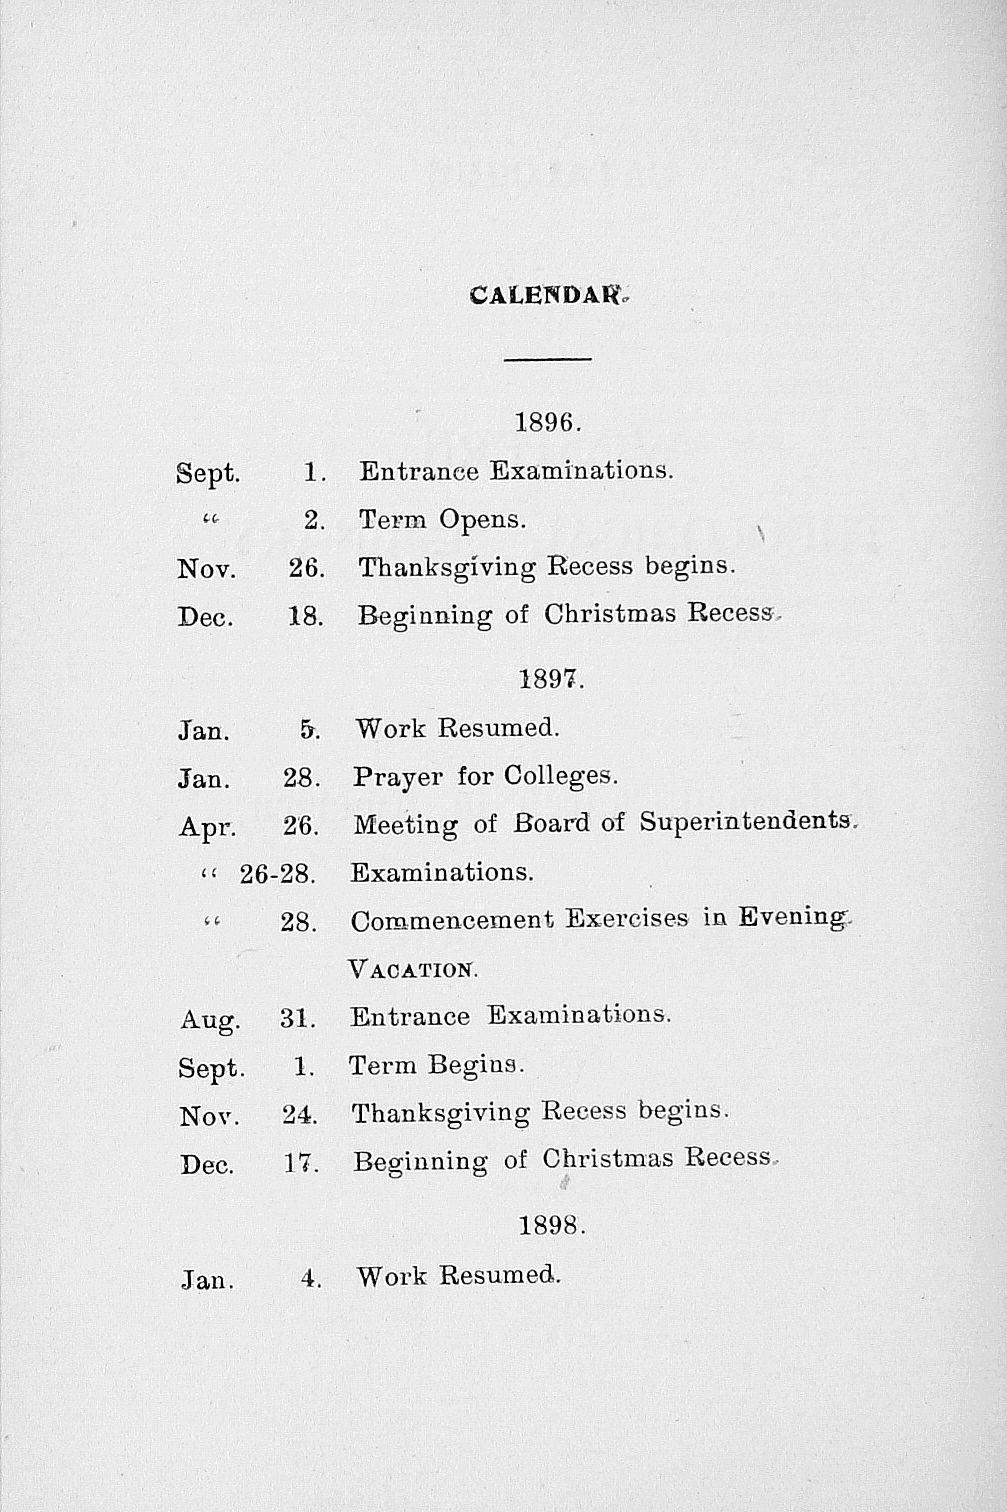 CALENDAR, 1896. Sept. 1. Entrance Examinations. it 2. Term Opens. Nov. 26. Thanksgiving Recess begins. Dec. 18. Beginning of Christmas Recess- 1897. Jan. 5. Work Resumed. Jan. 28. Prayer for Colleges.